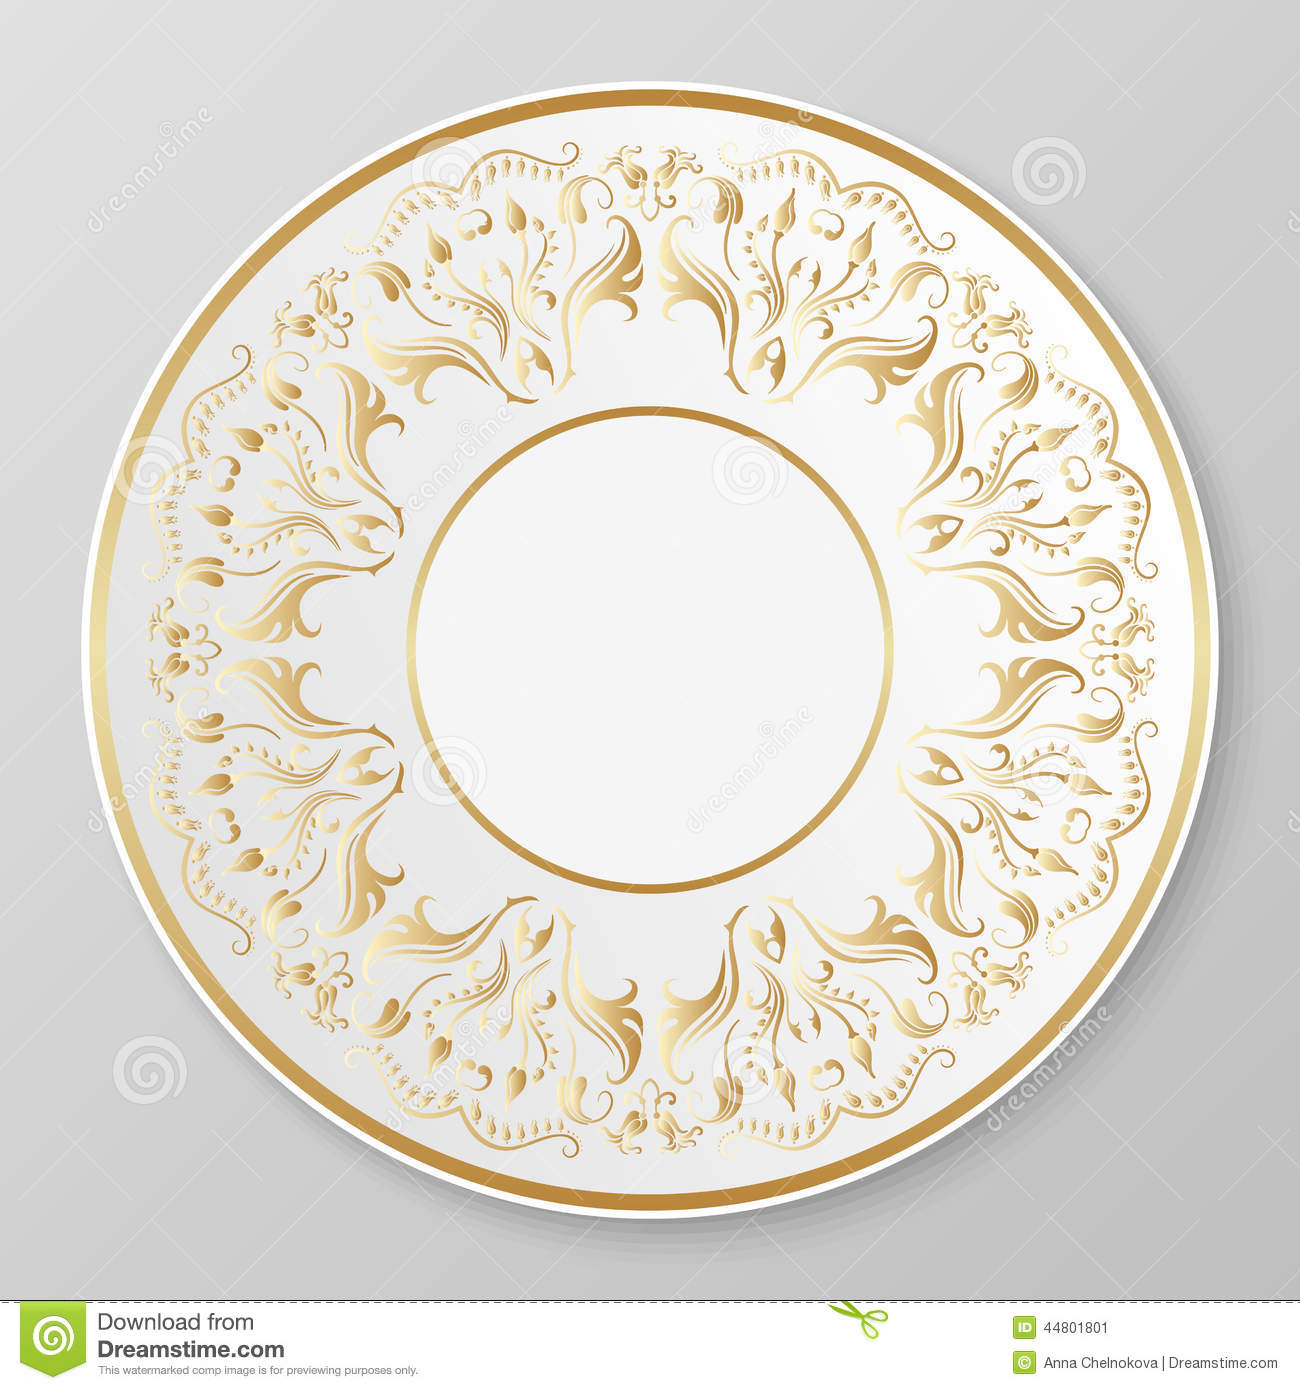 Gold Decorative Plate